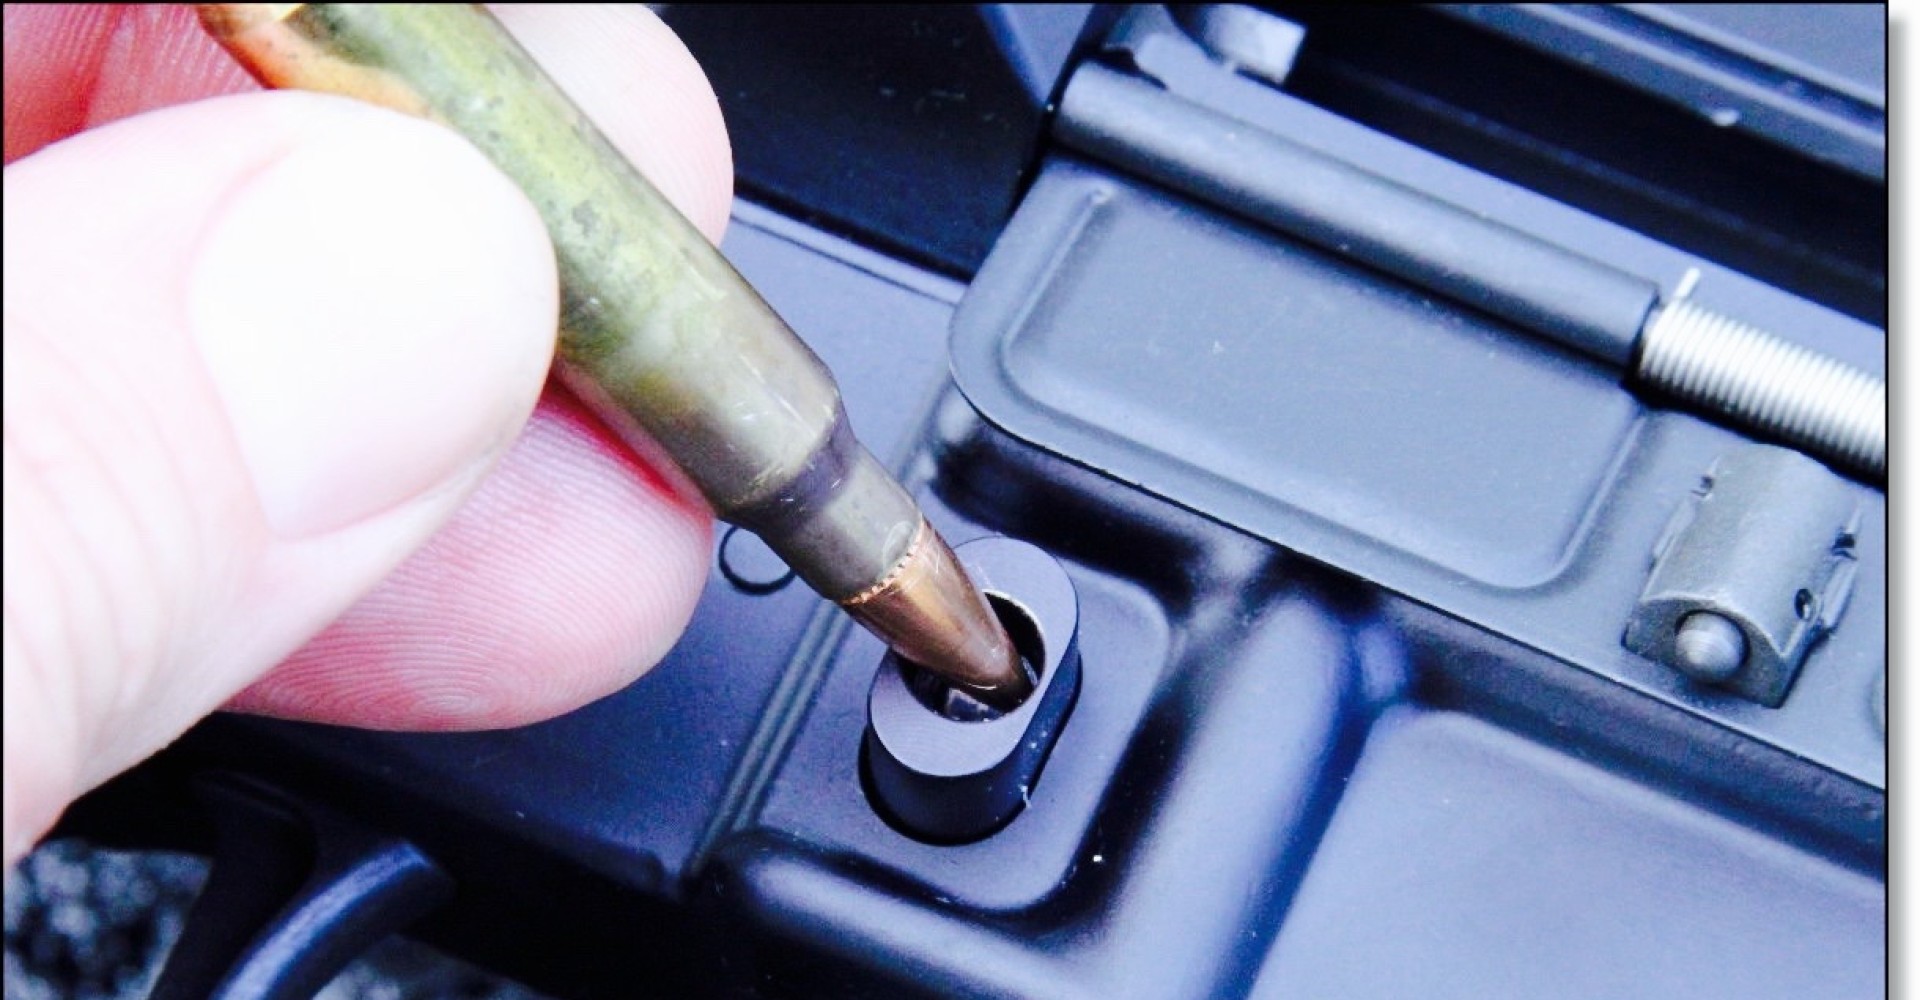 A California-legal bullet button on a semiautomatic rifle. (www.gunsamerica.com)